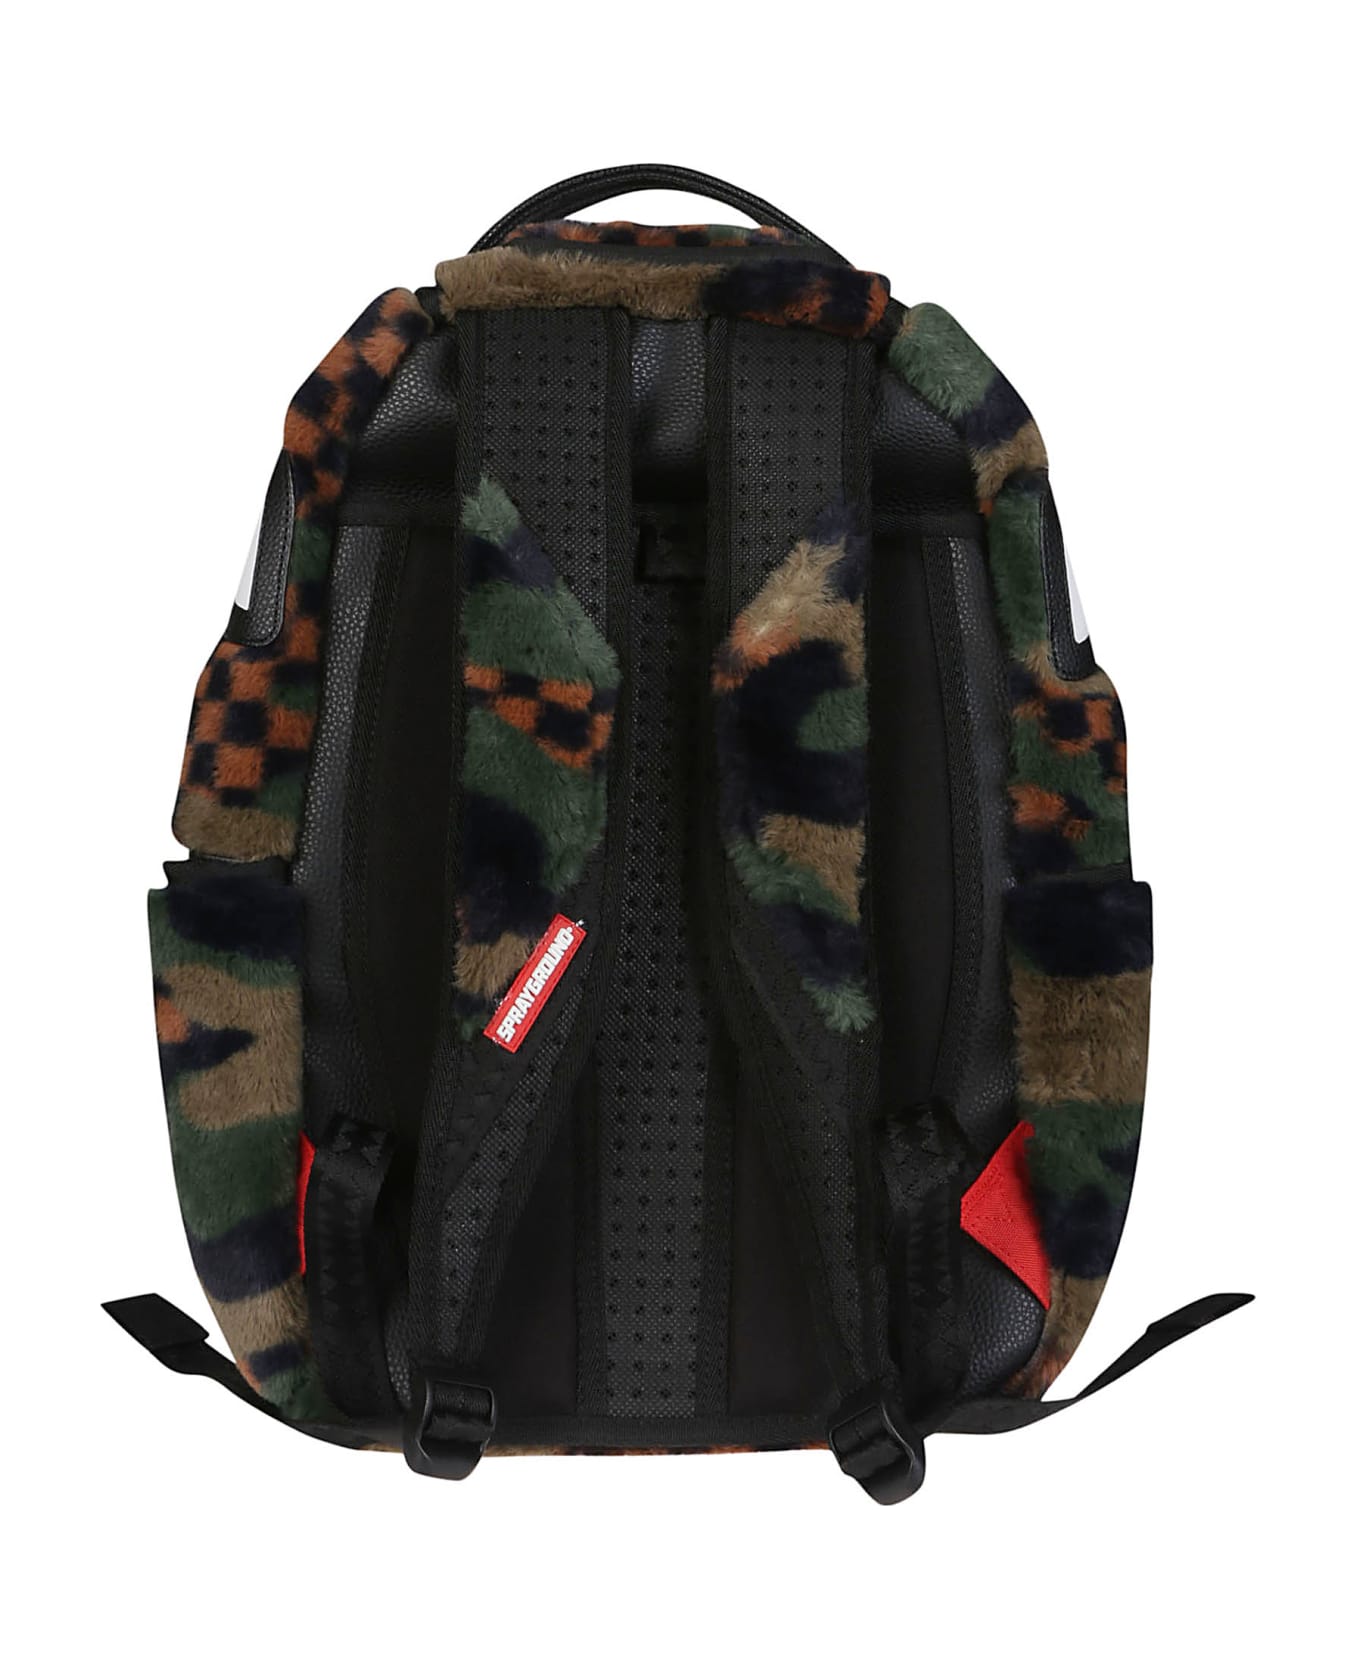 Sprayground Backpack - Camouflage